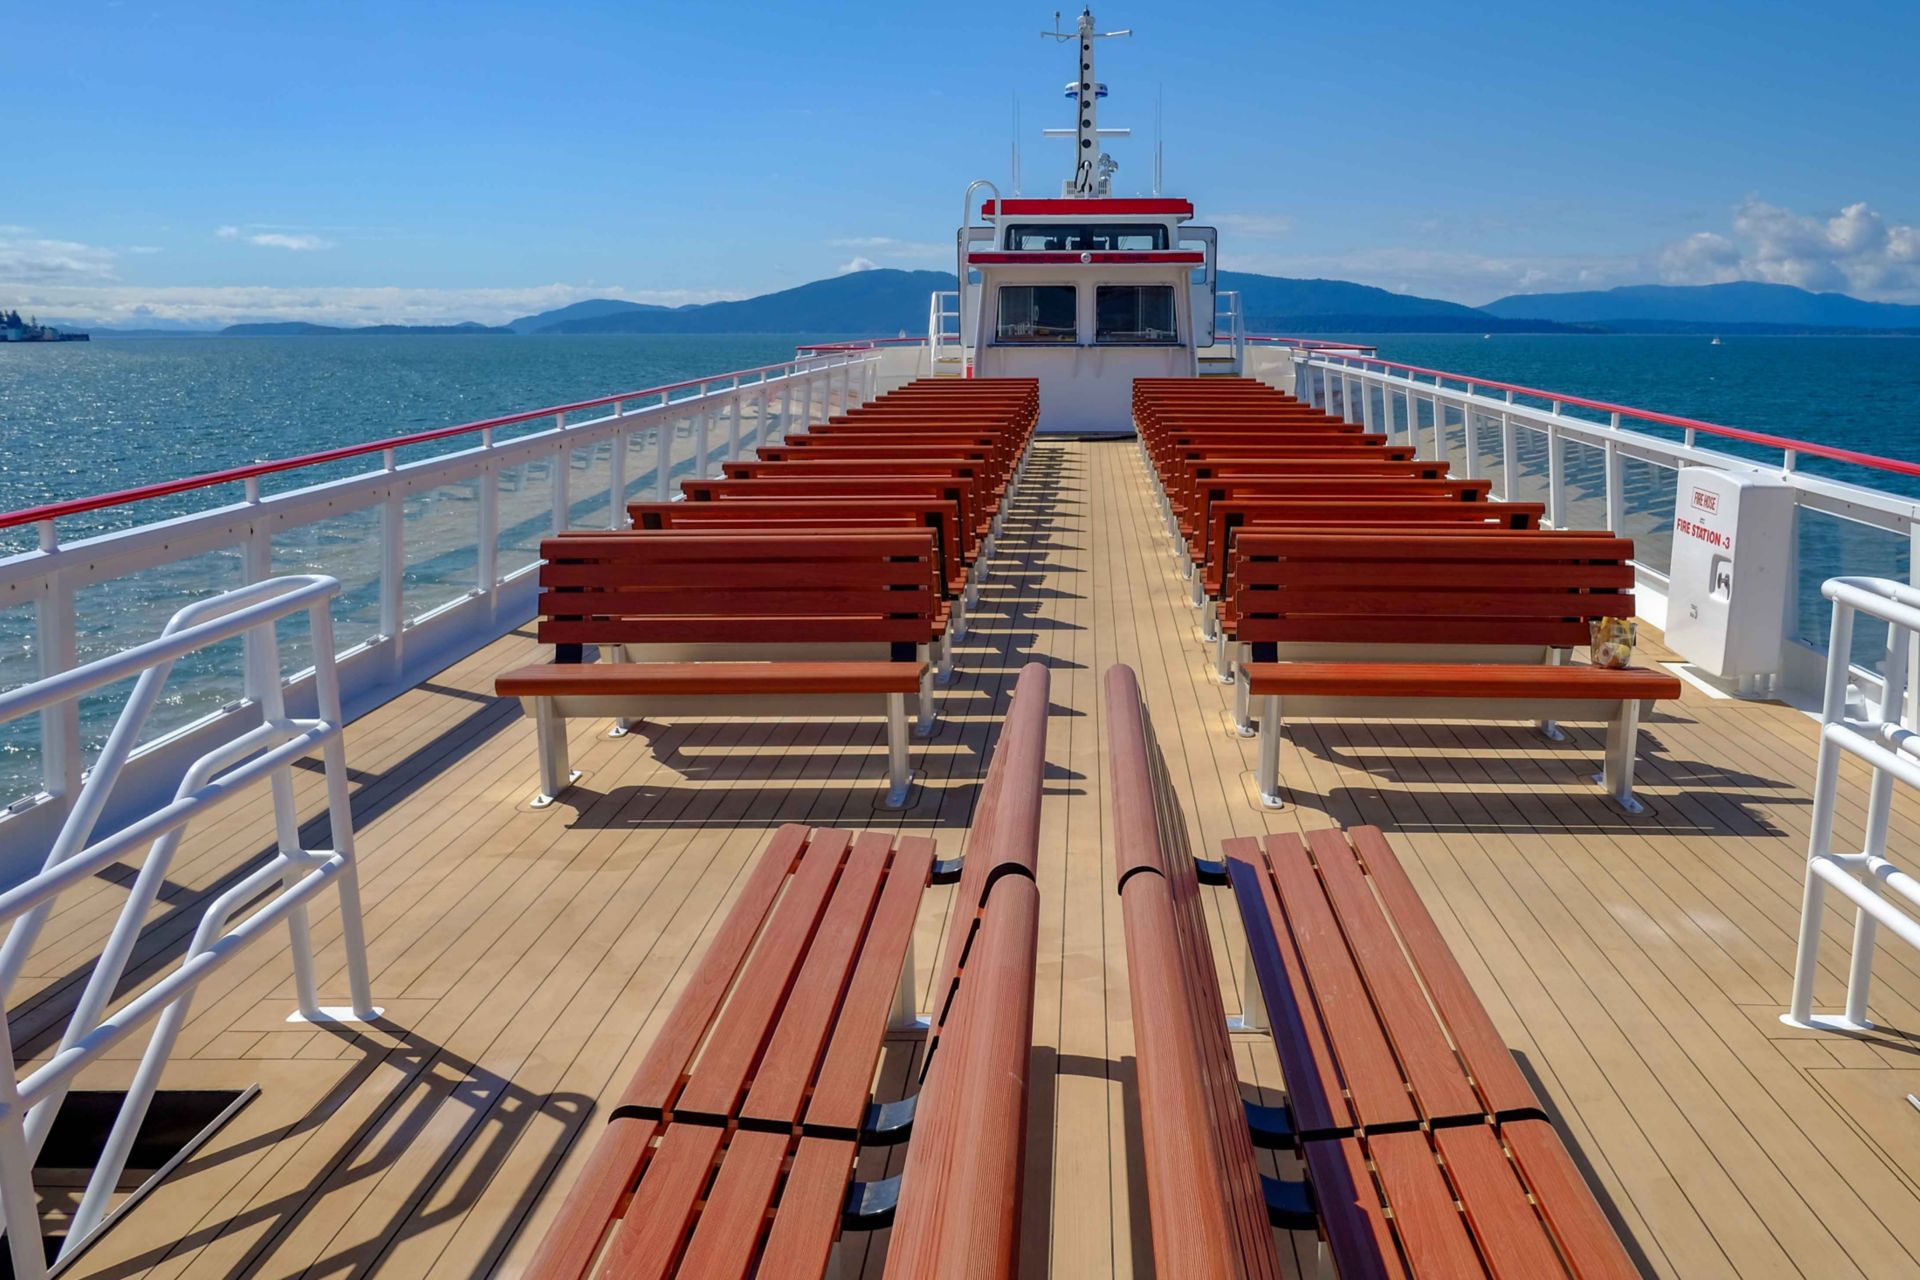 Sika Teak deck for passenger vessel